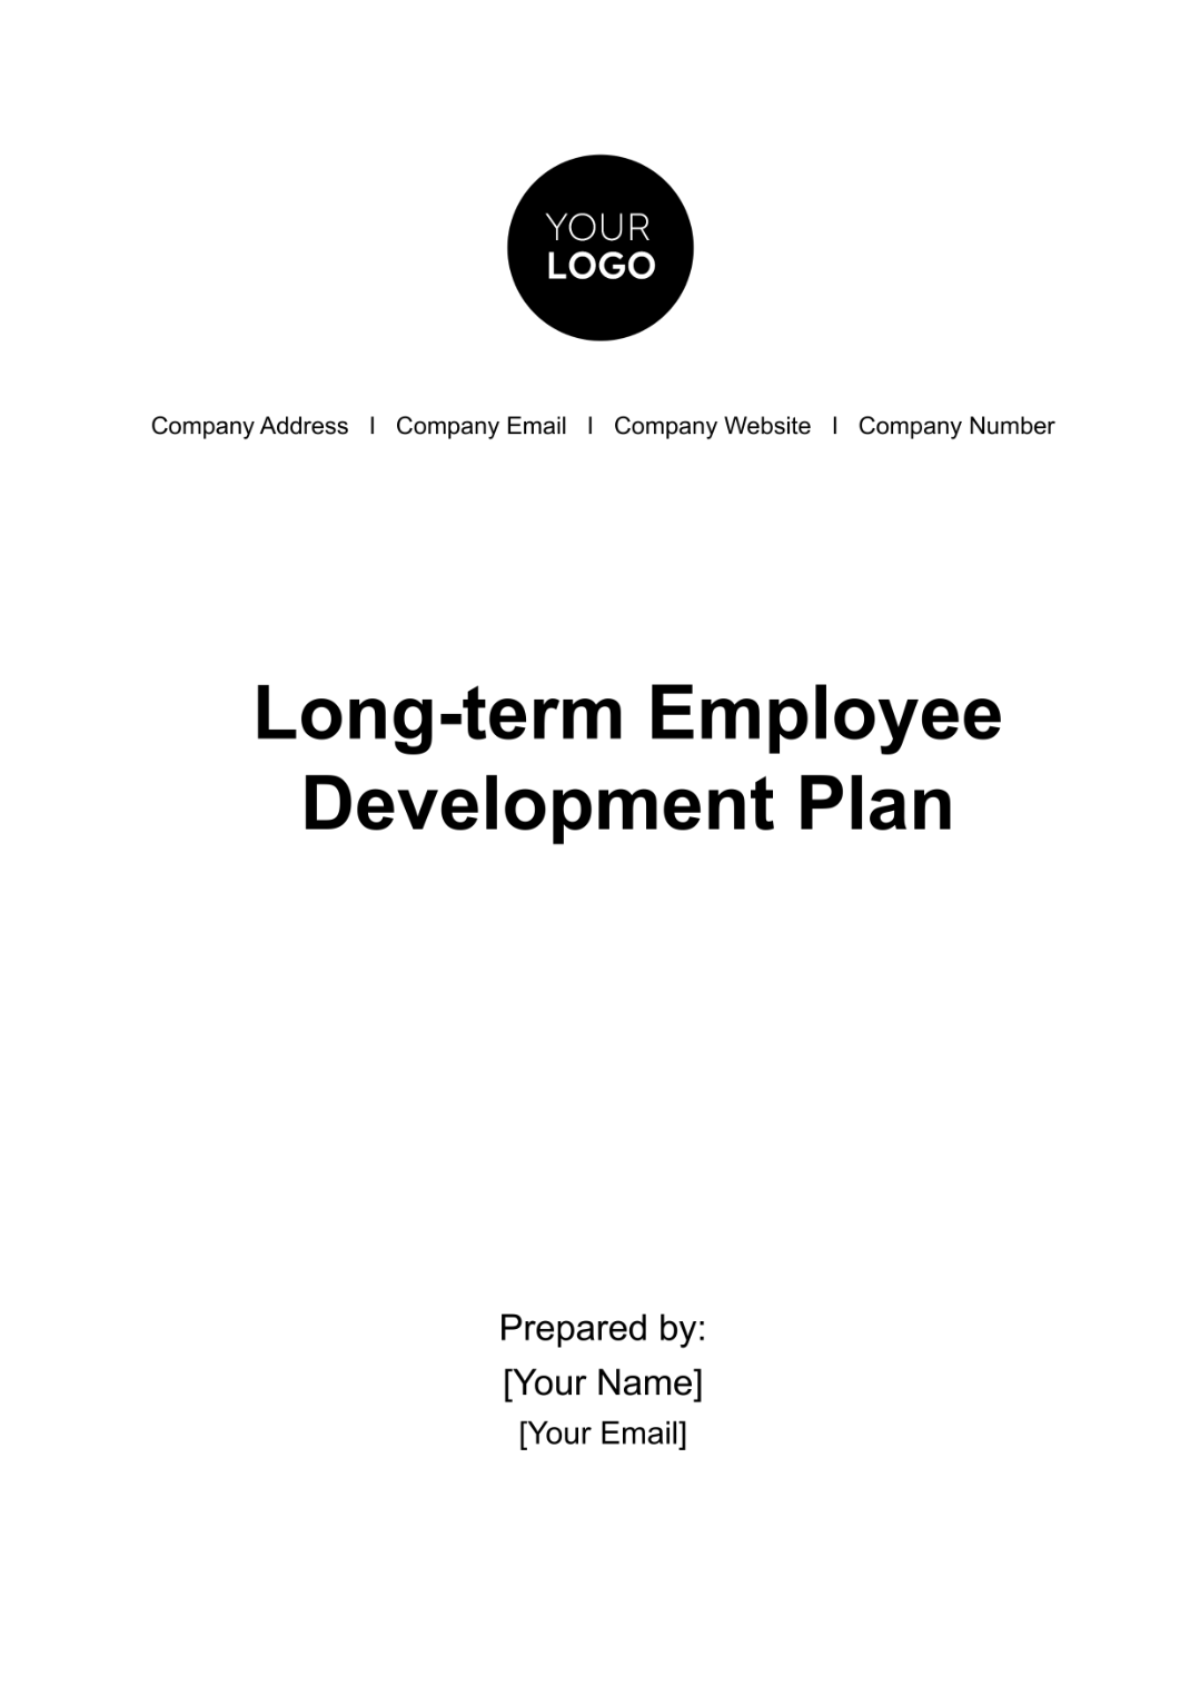 Free Long-term Employee Development Plan HR Template